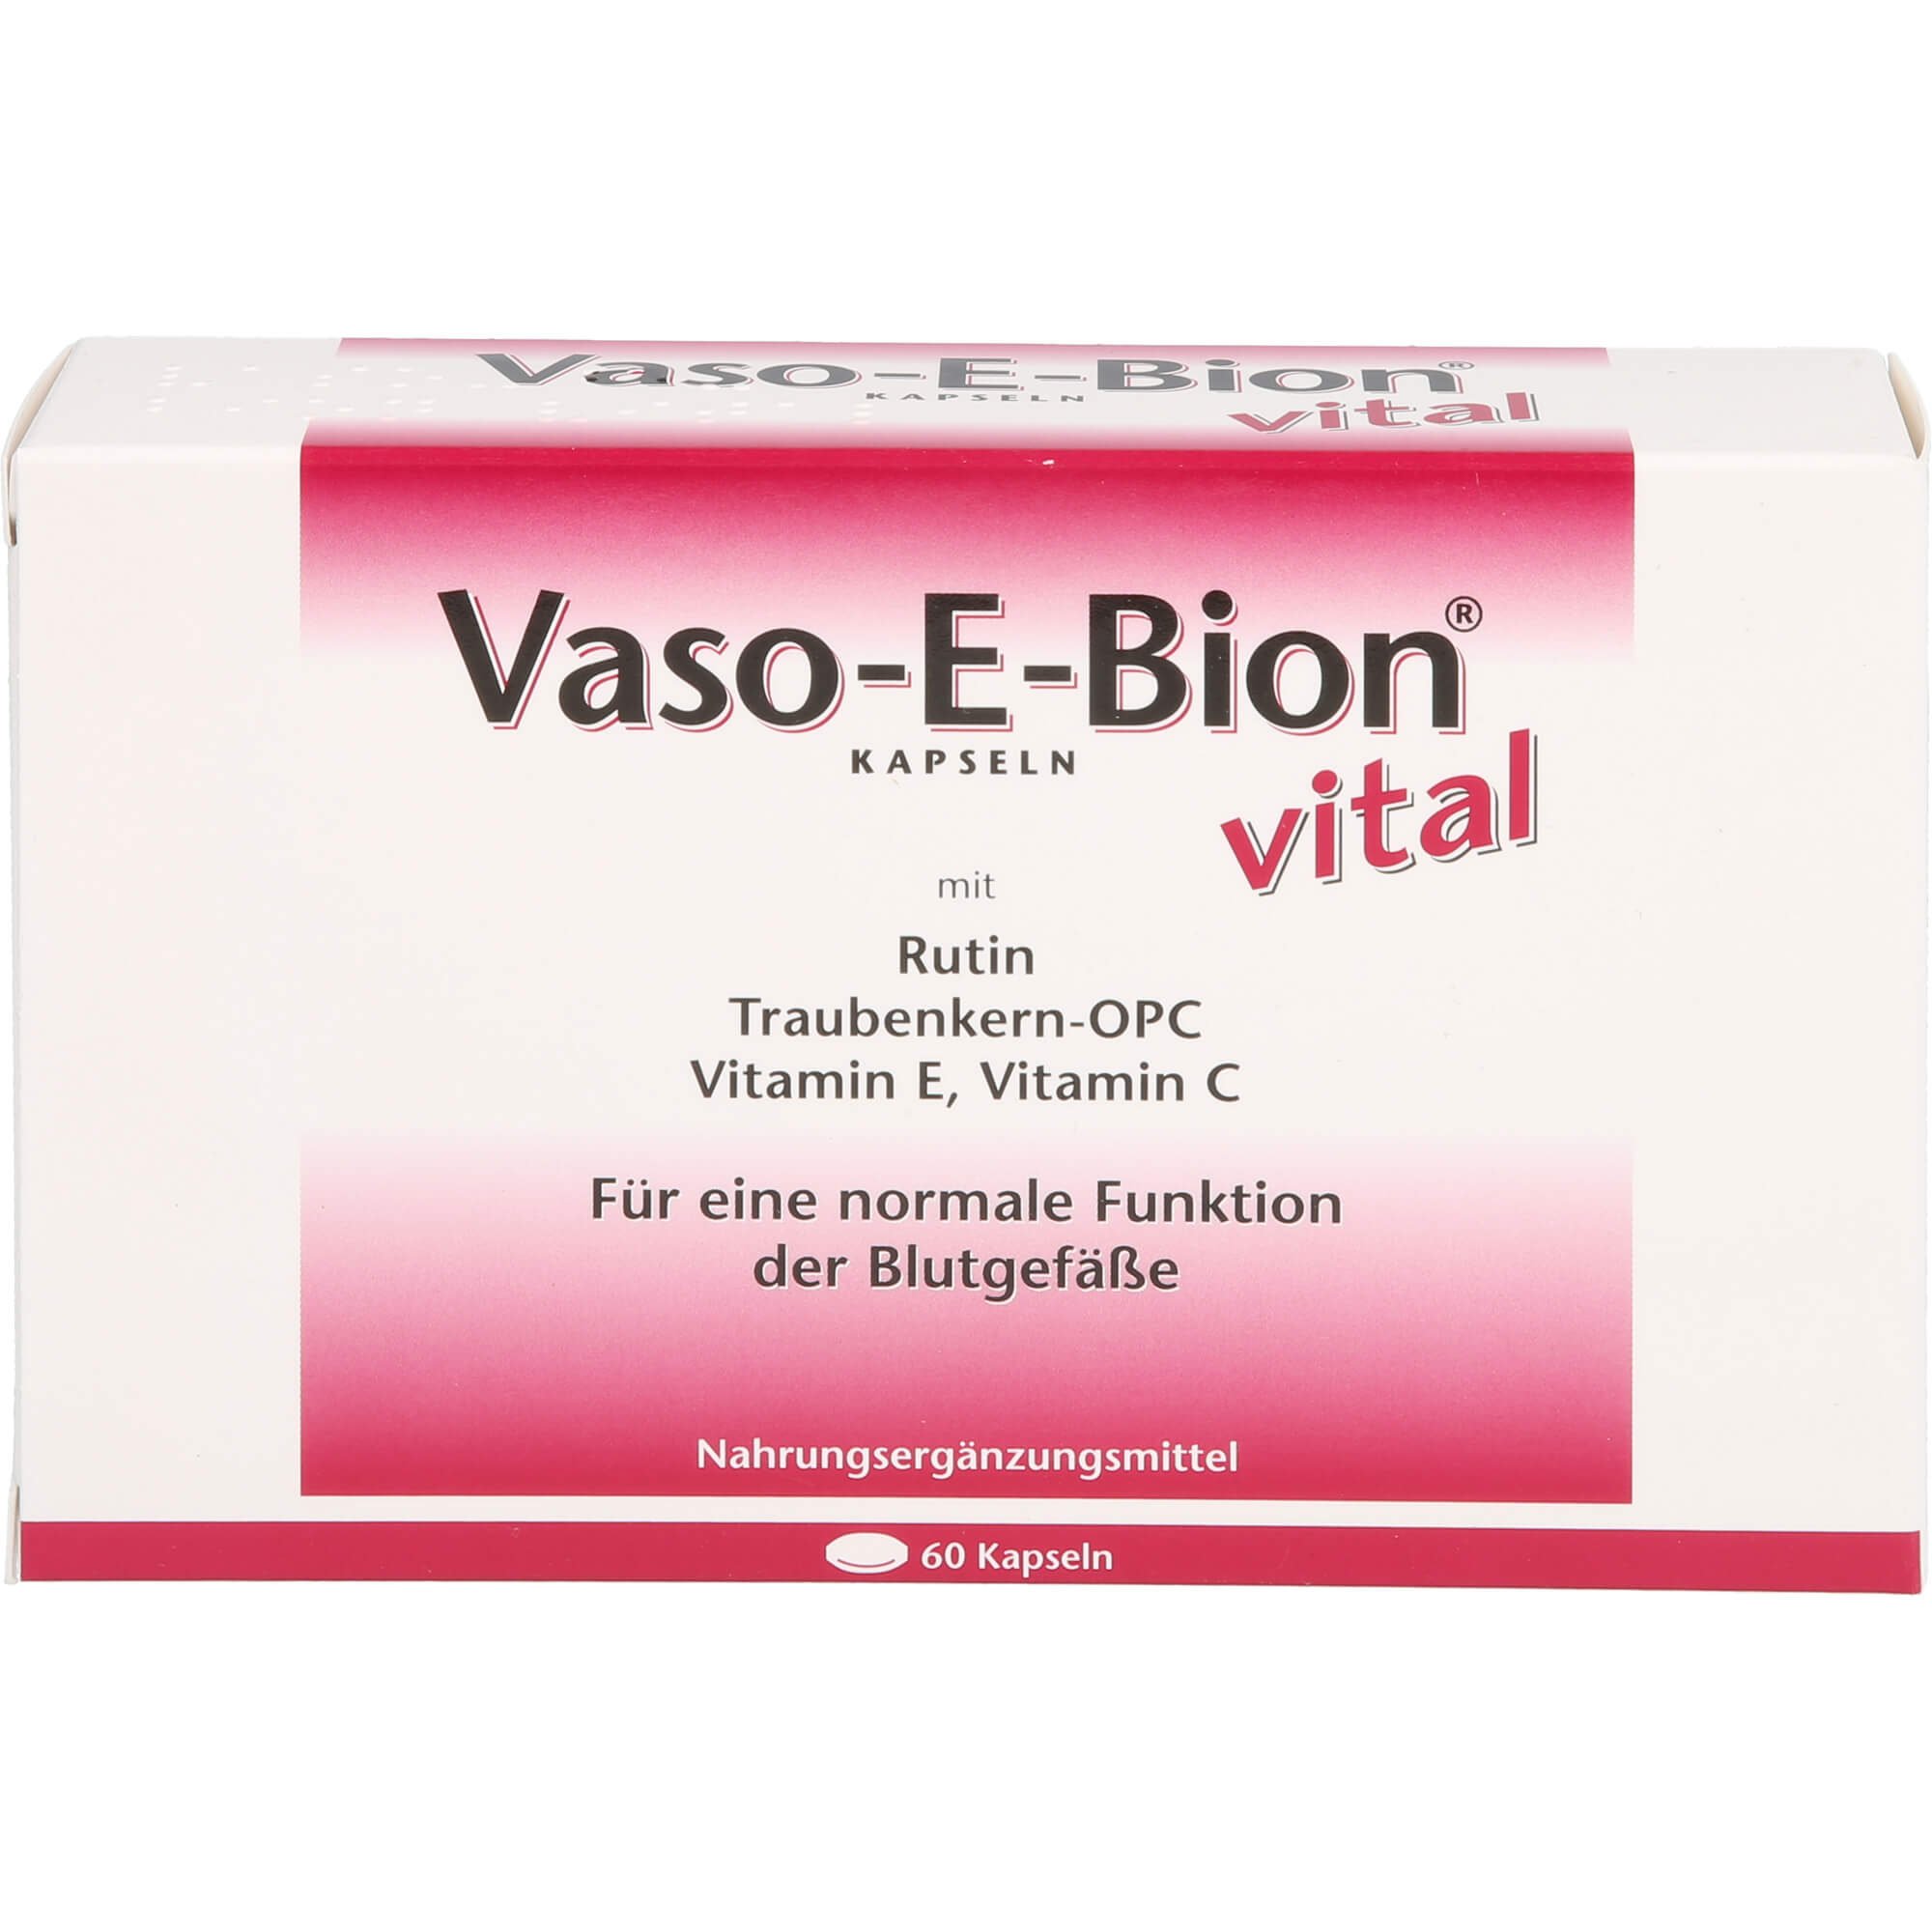 VASO-E-BION vital Kapseln